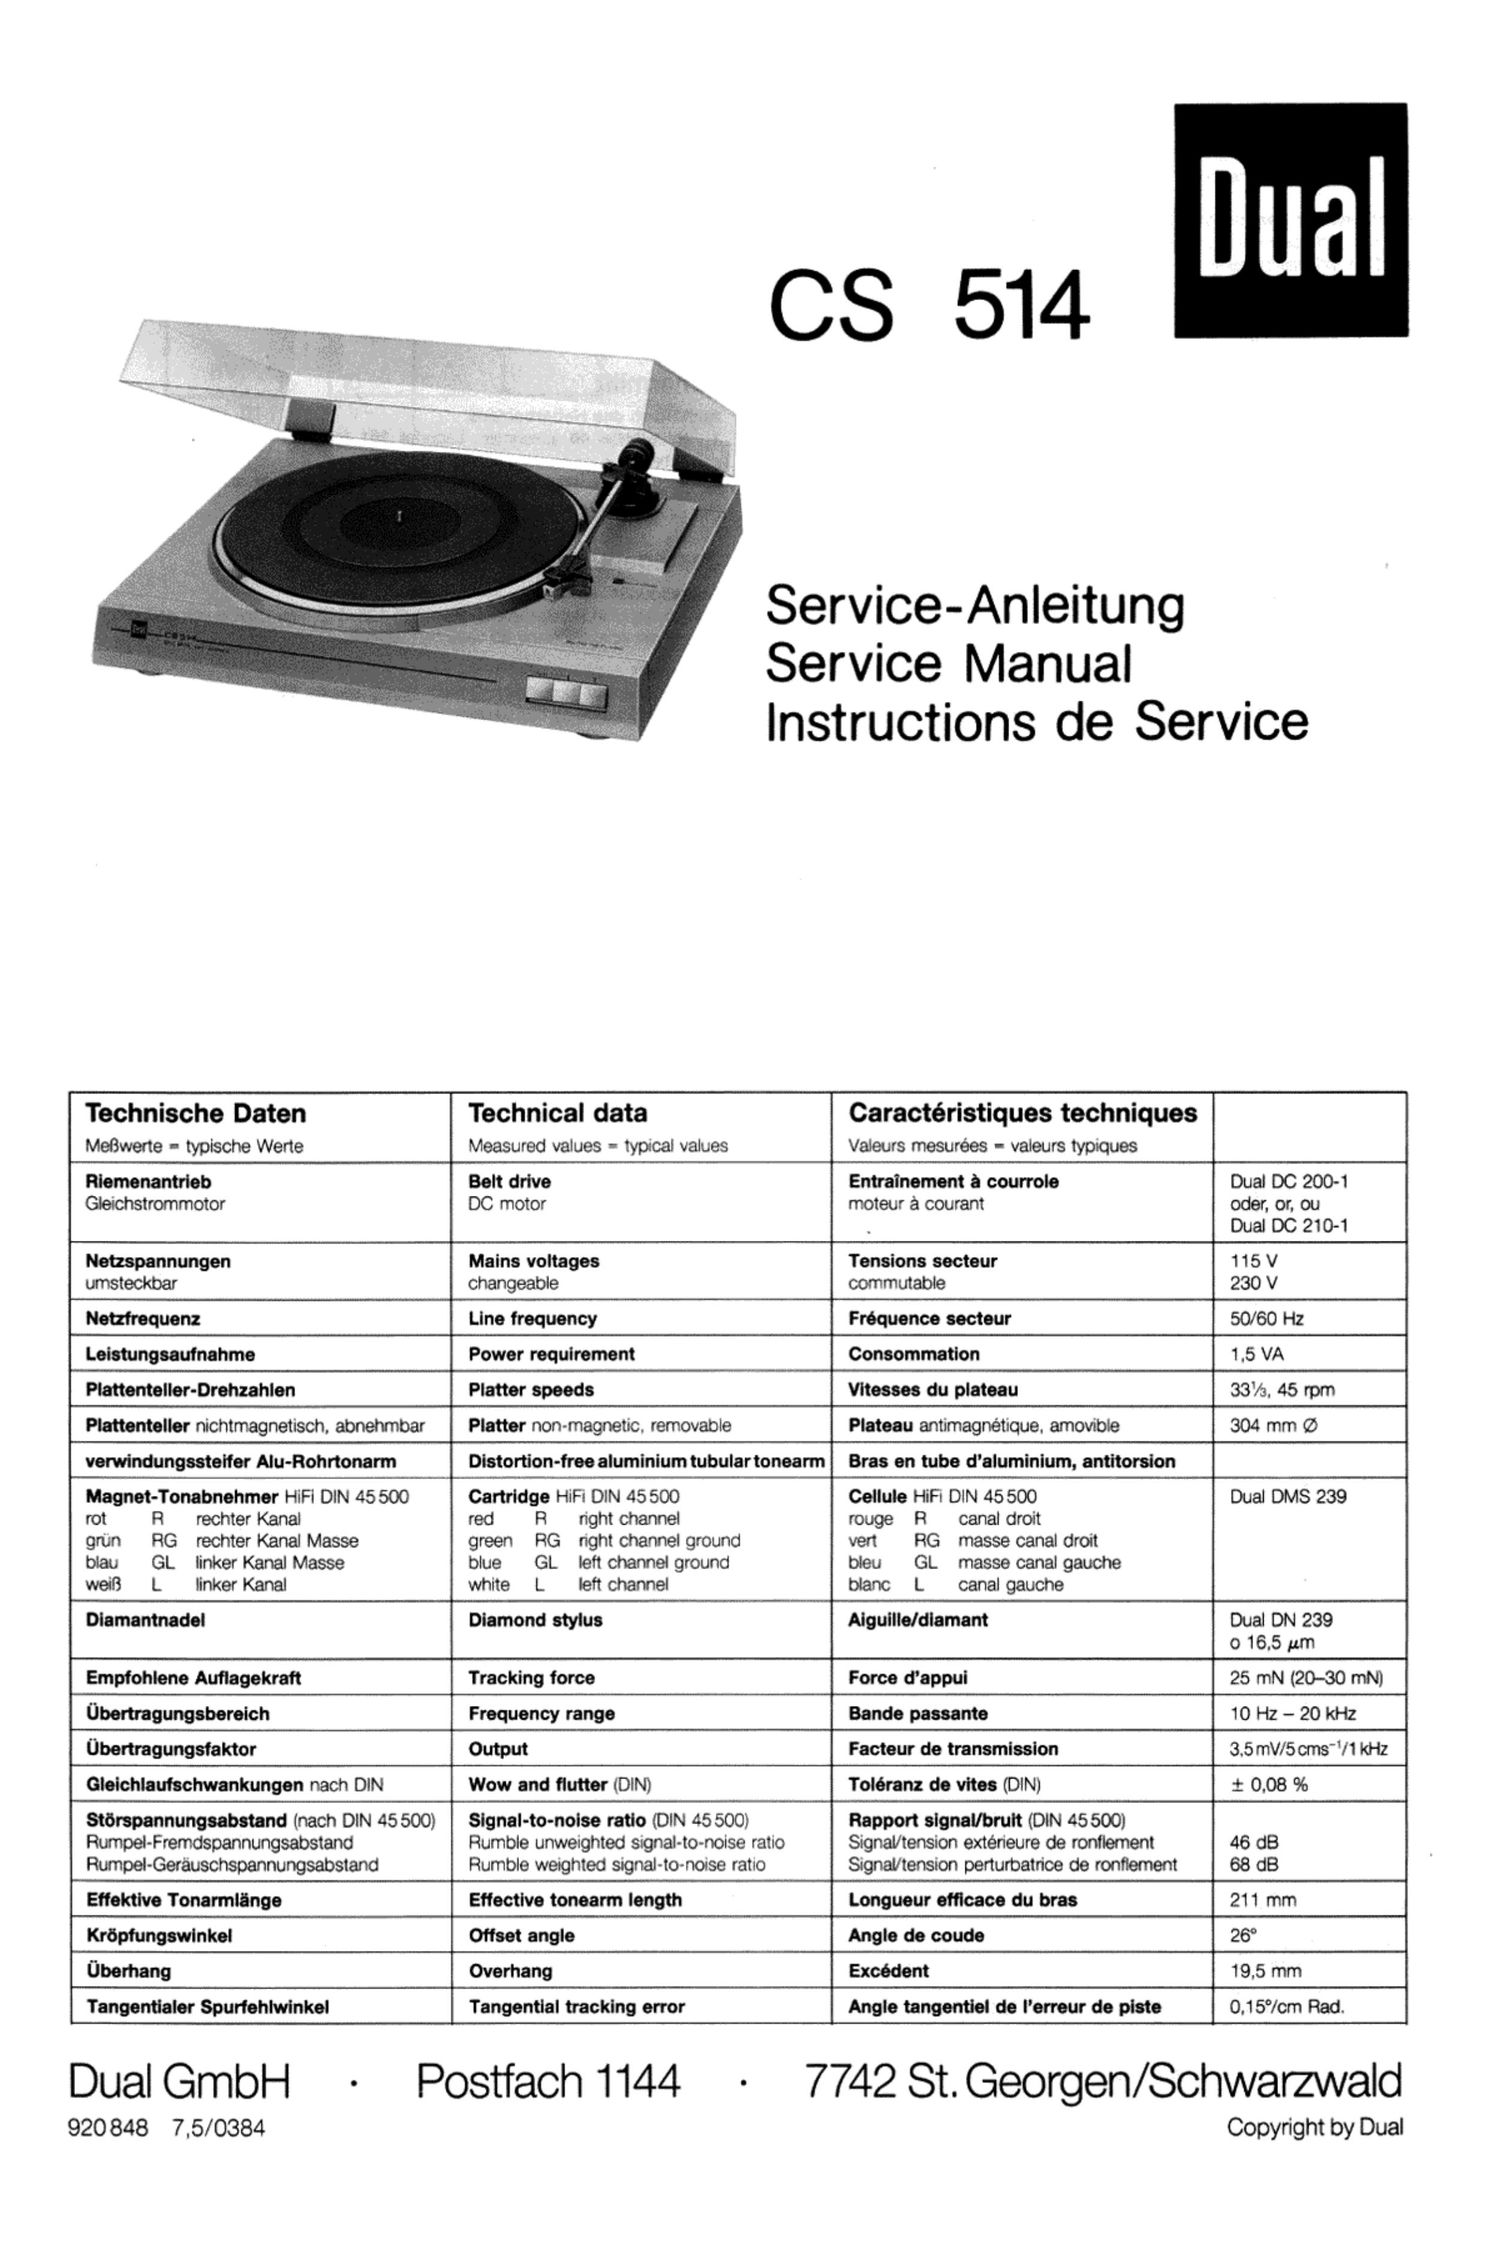 Dual CS 514 Service Manual